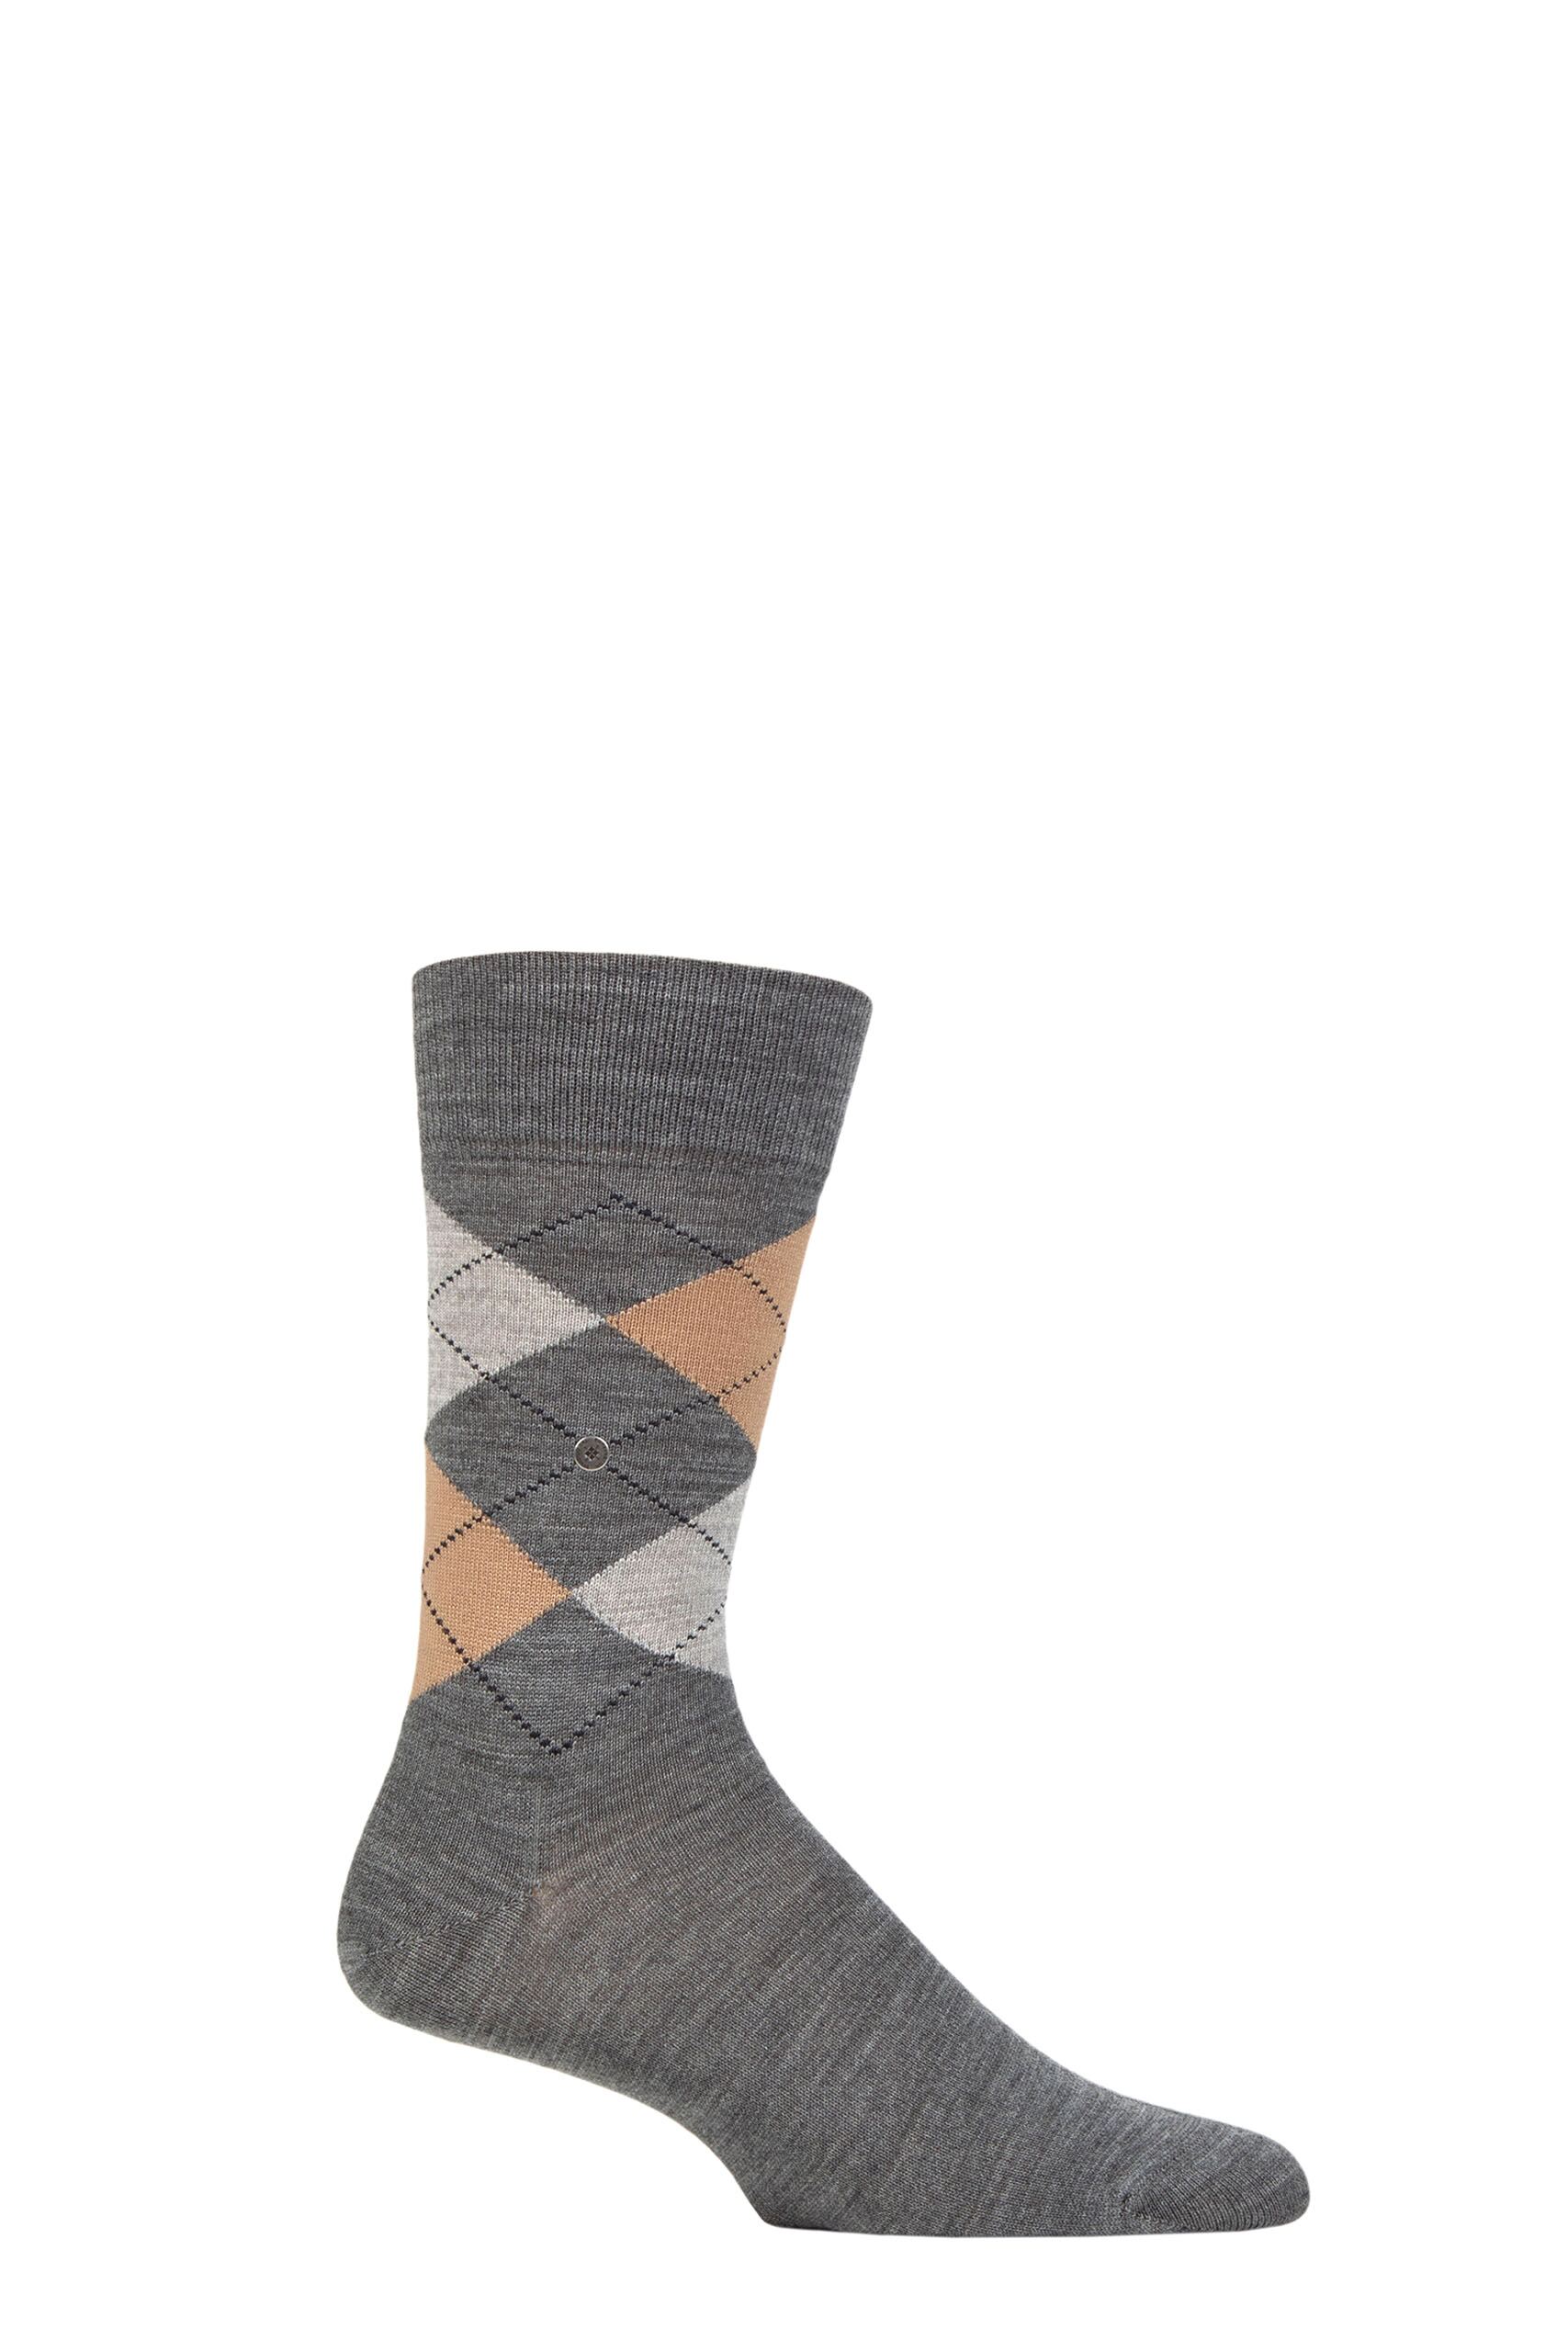 Mens 1 Pair Burlington Edinburgh Virgin Wool Argyle Socks Grey / Browns 6.5-11 Mens